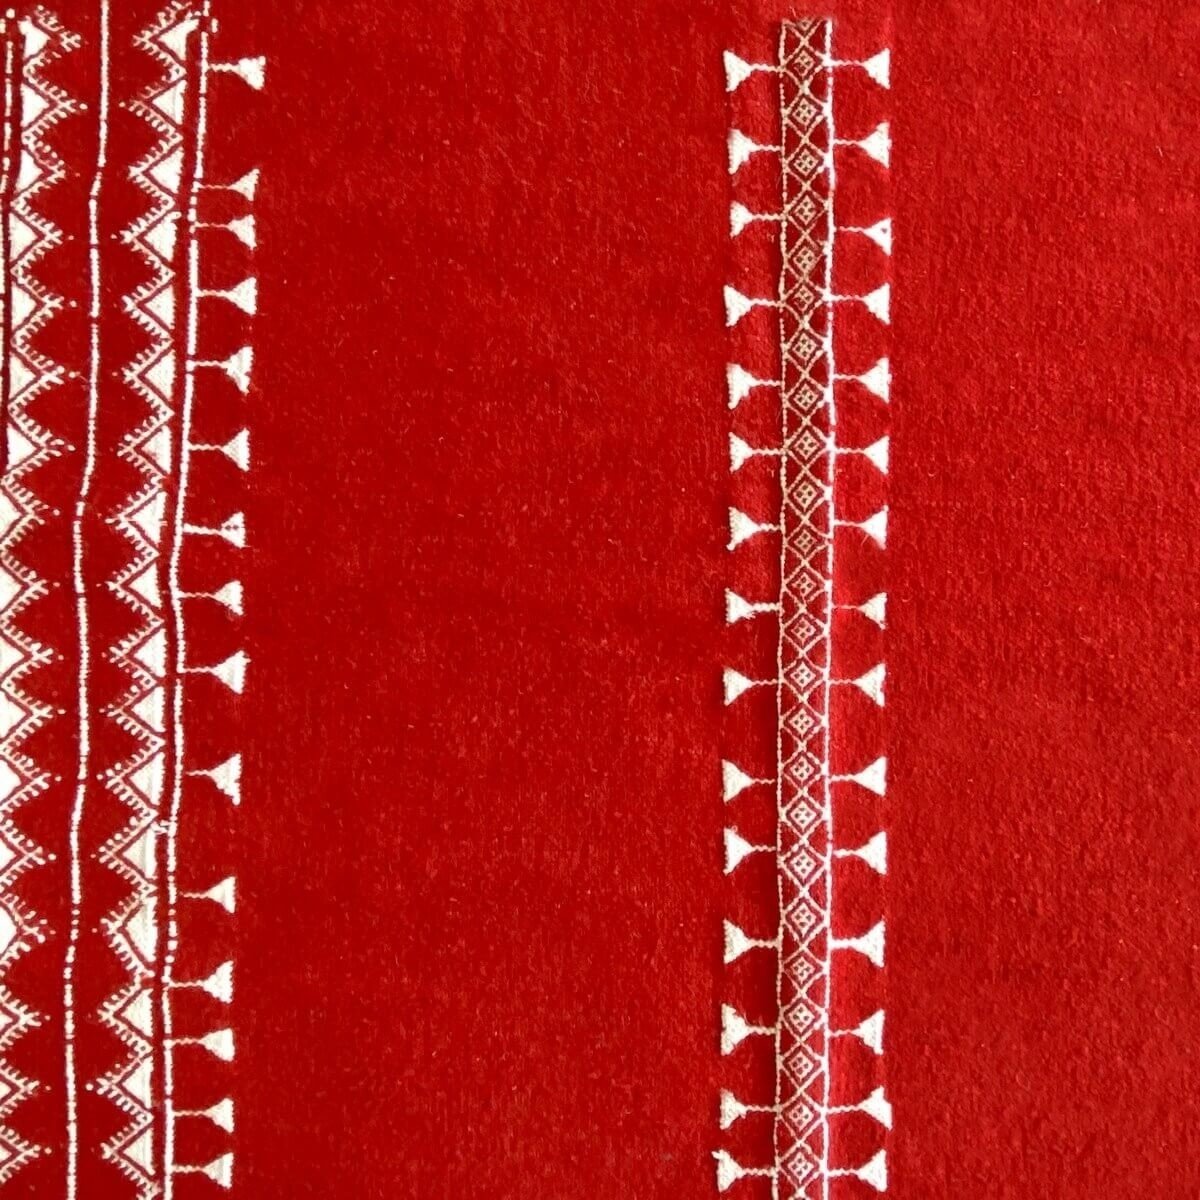 Tapete berbere Tapete Kilim Nassen 105x208 Vermelho (Tecidos à mão, Lã, Tunísia) Tapete tunisiano kilim, estilo marroquino. Tape